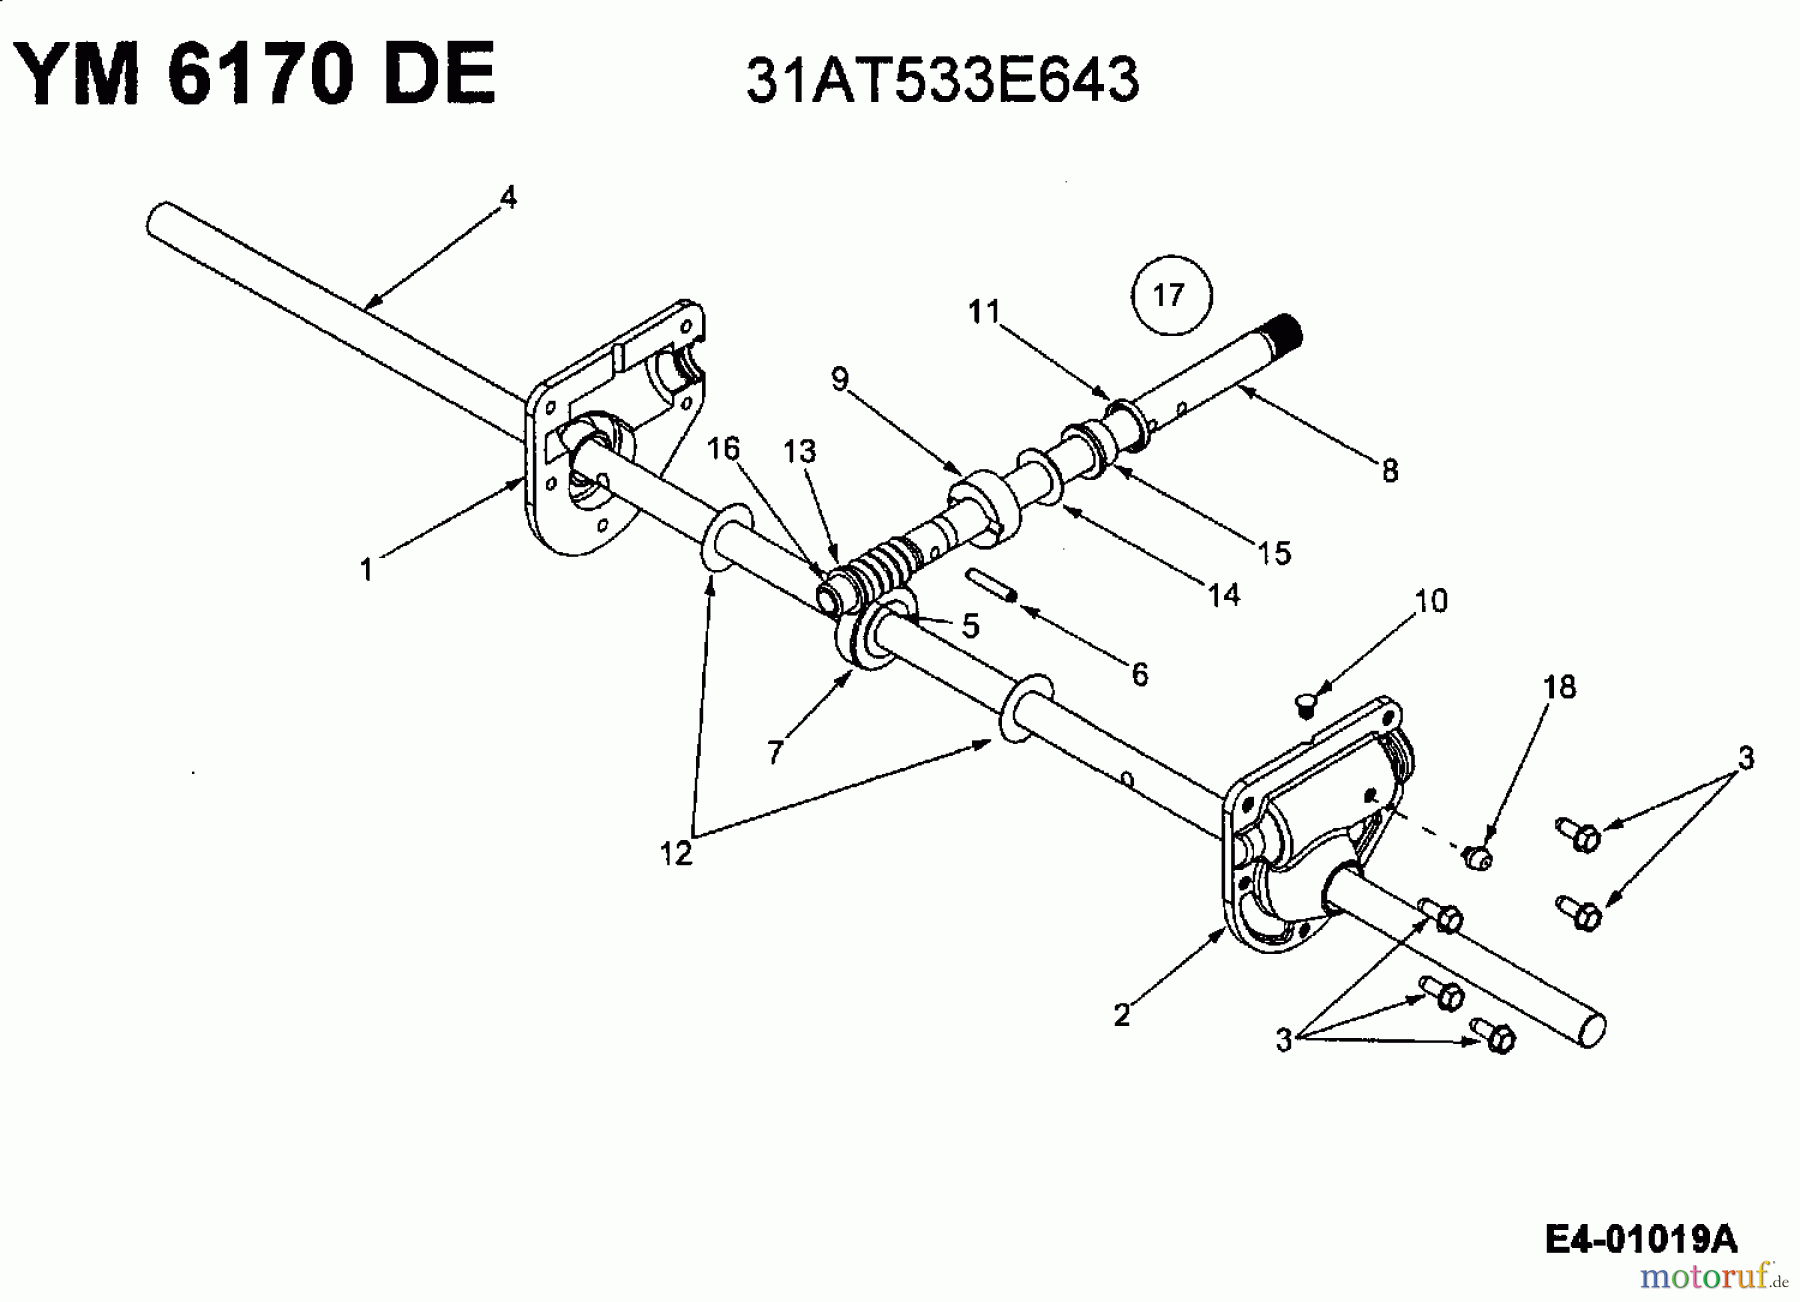  Yard-Man Snow throwers E 533 E 31AE533E643  (1999) Auger gearbox